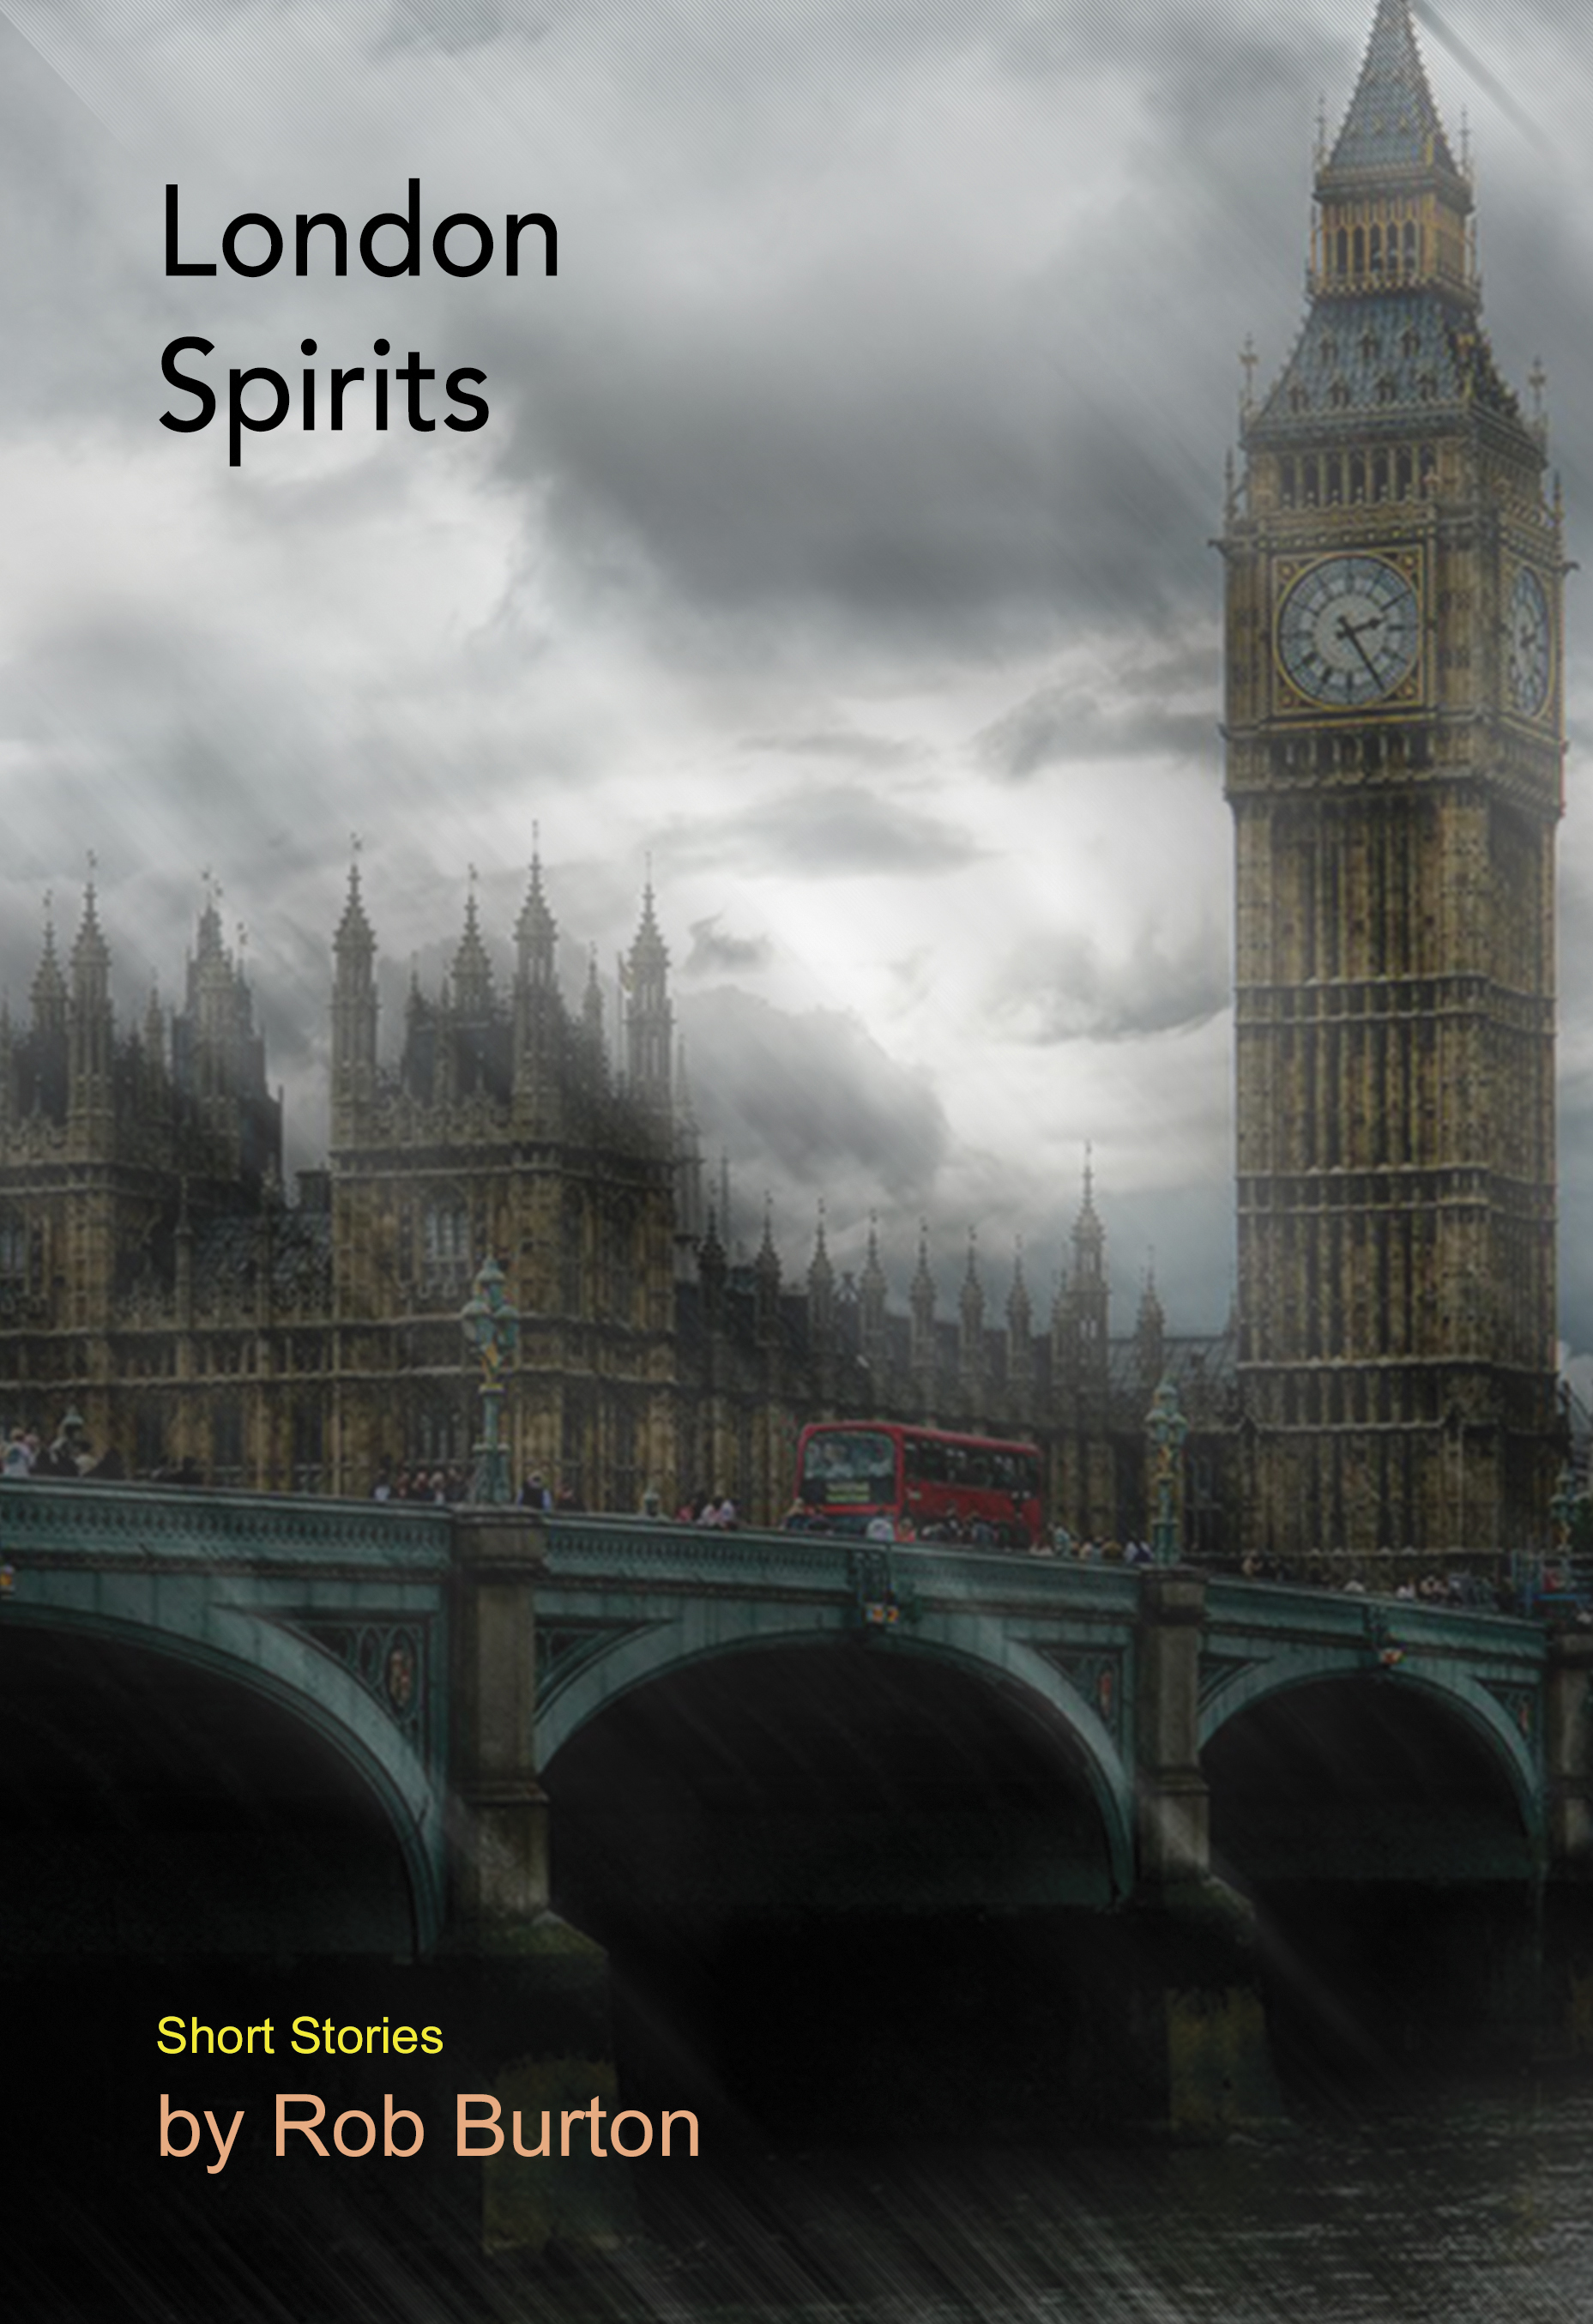 London Spirits by Rob Burton